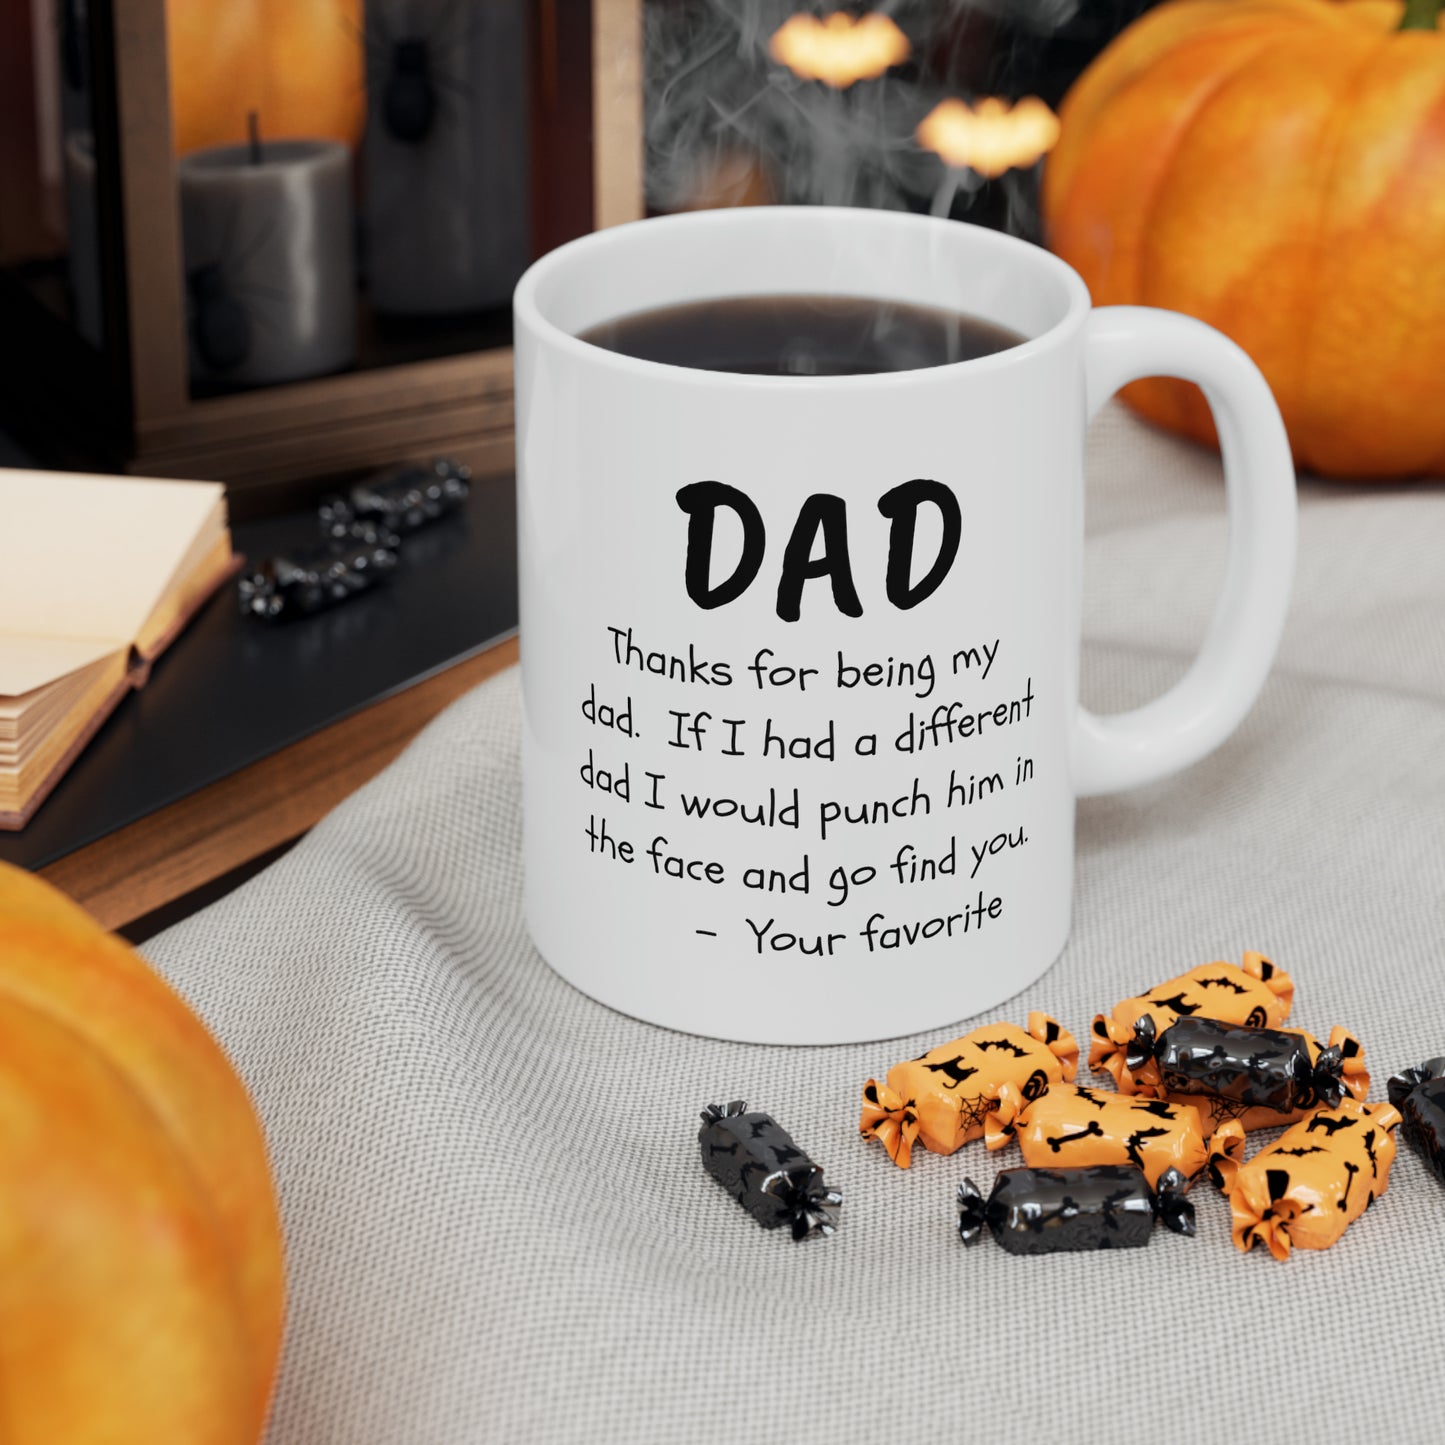 For Dad | Father's Day/Birthday gift/Ceramic Mug, 11oz